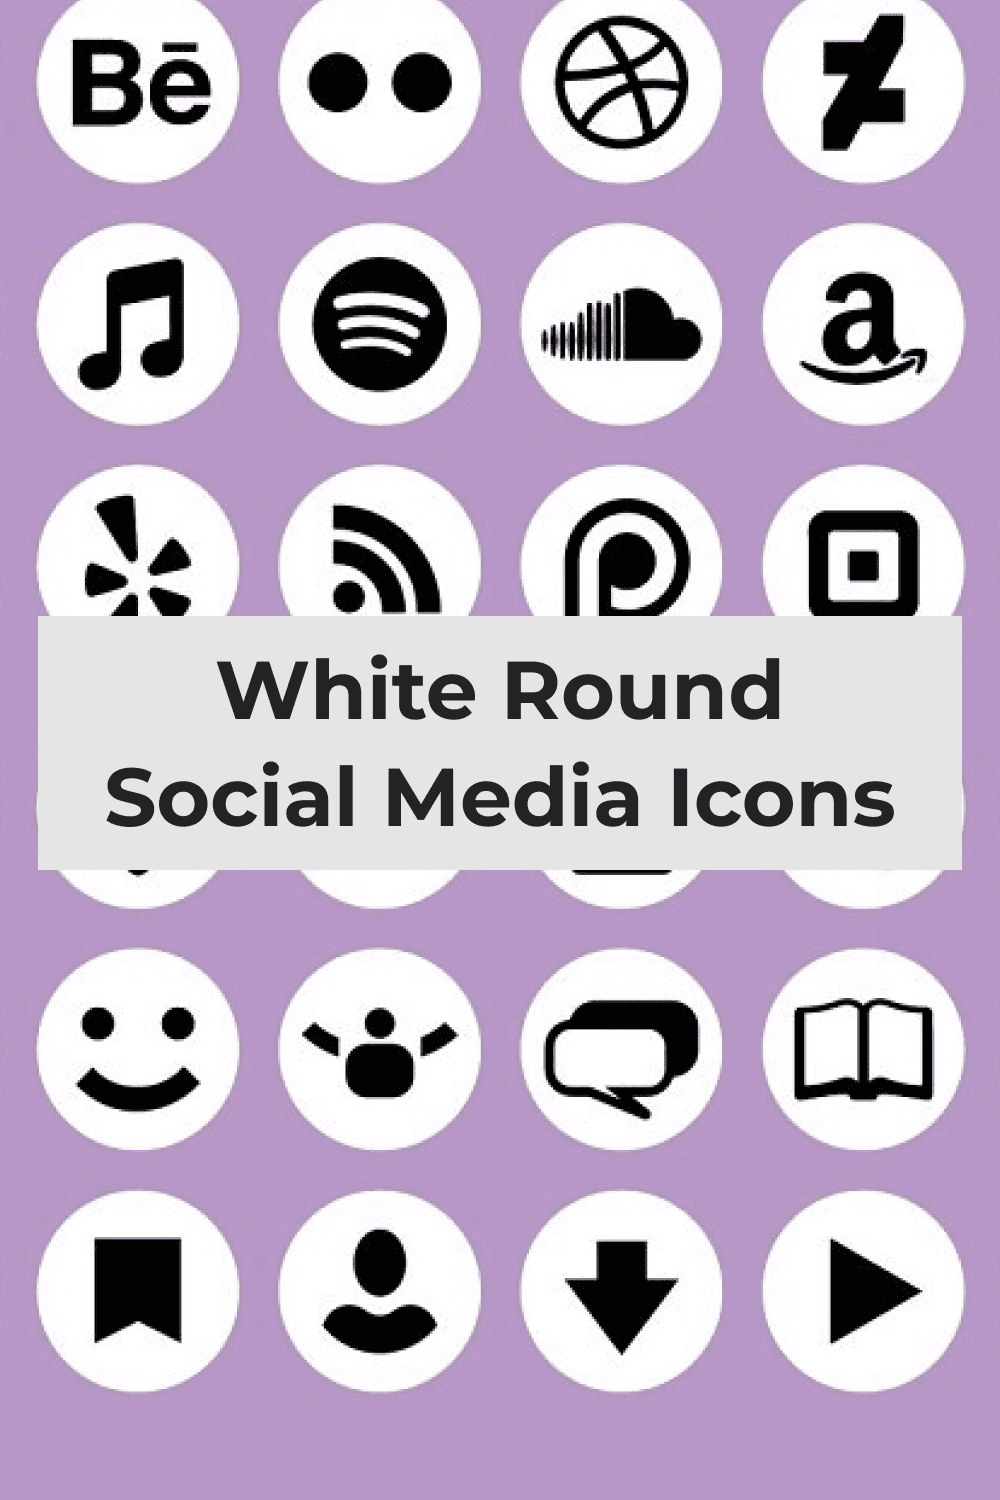 White Round Social Media Icons - Pinterest.